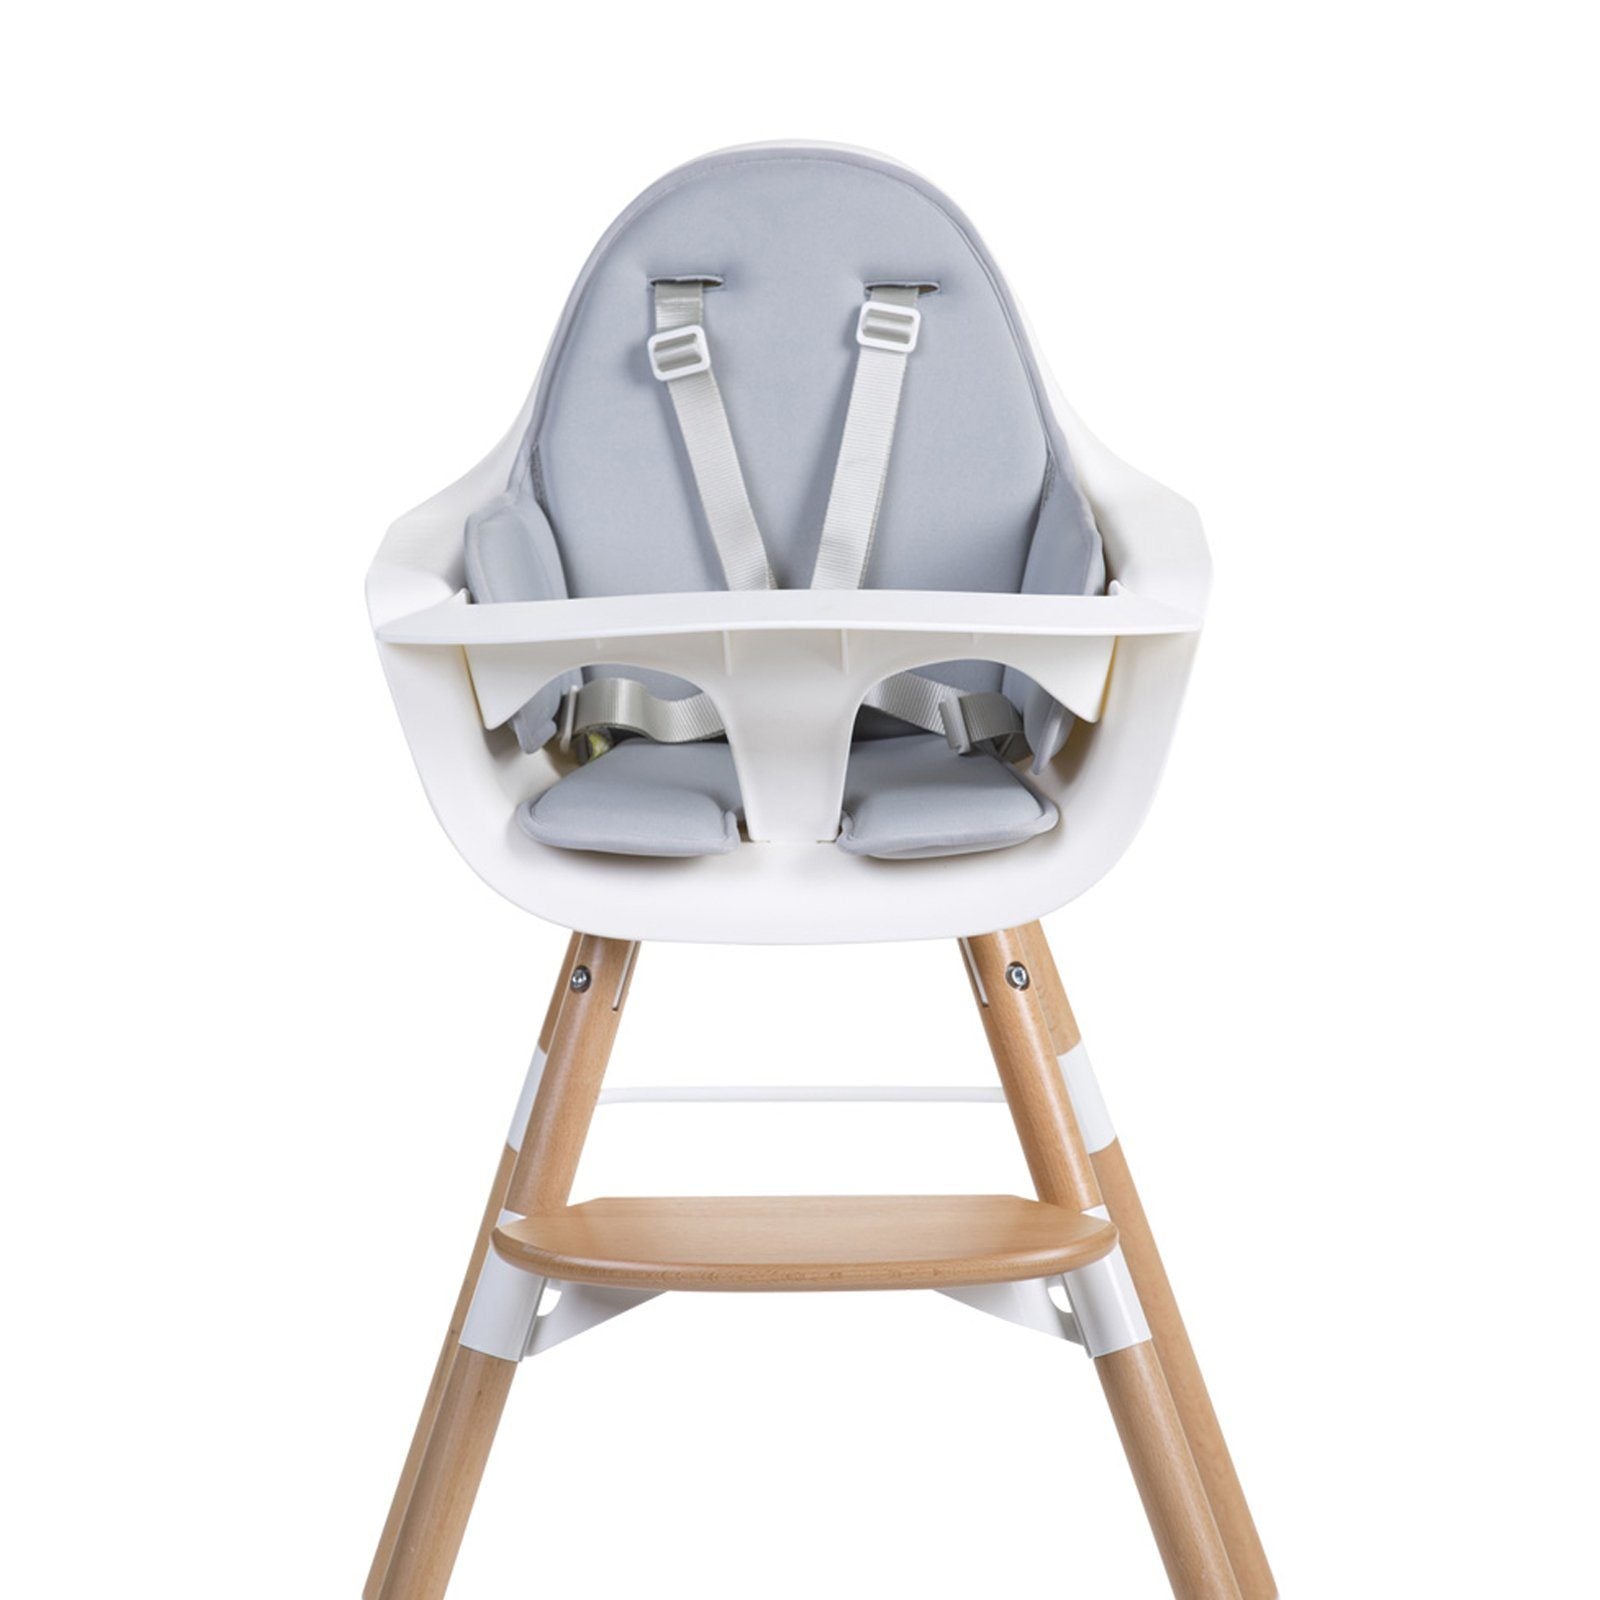 Evolu high chair Seat Cushion - Neoprene Light Grey by Childhome 